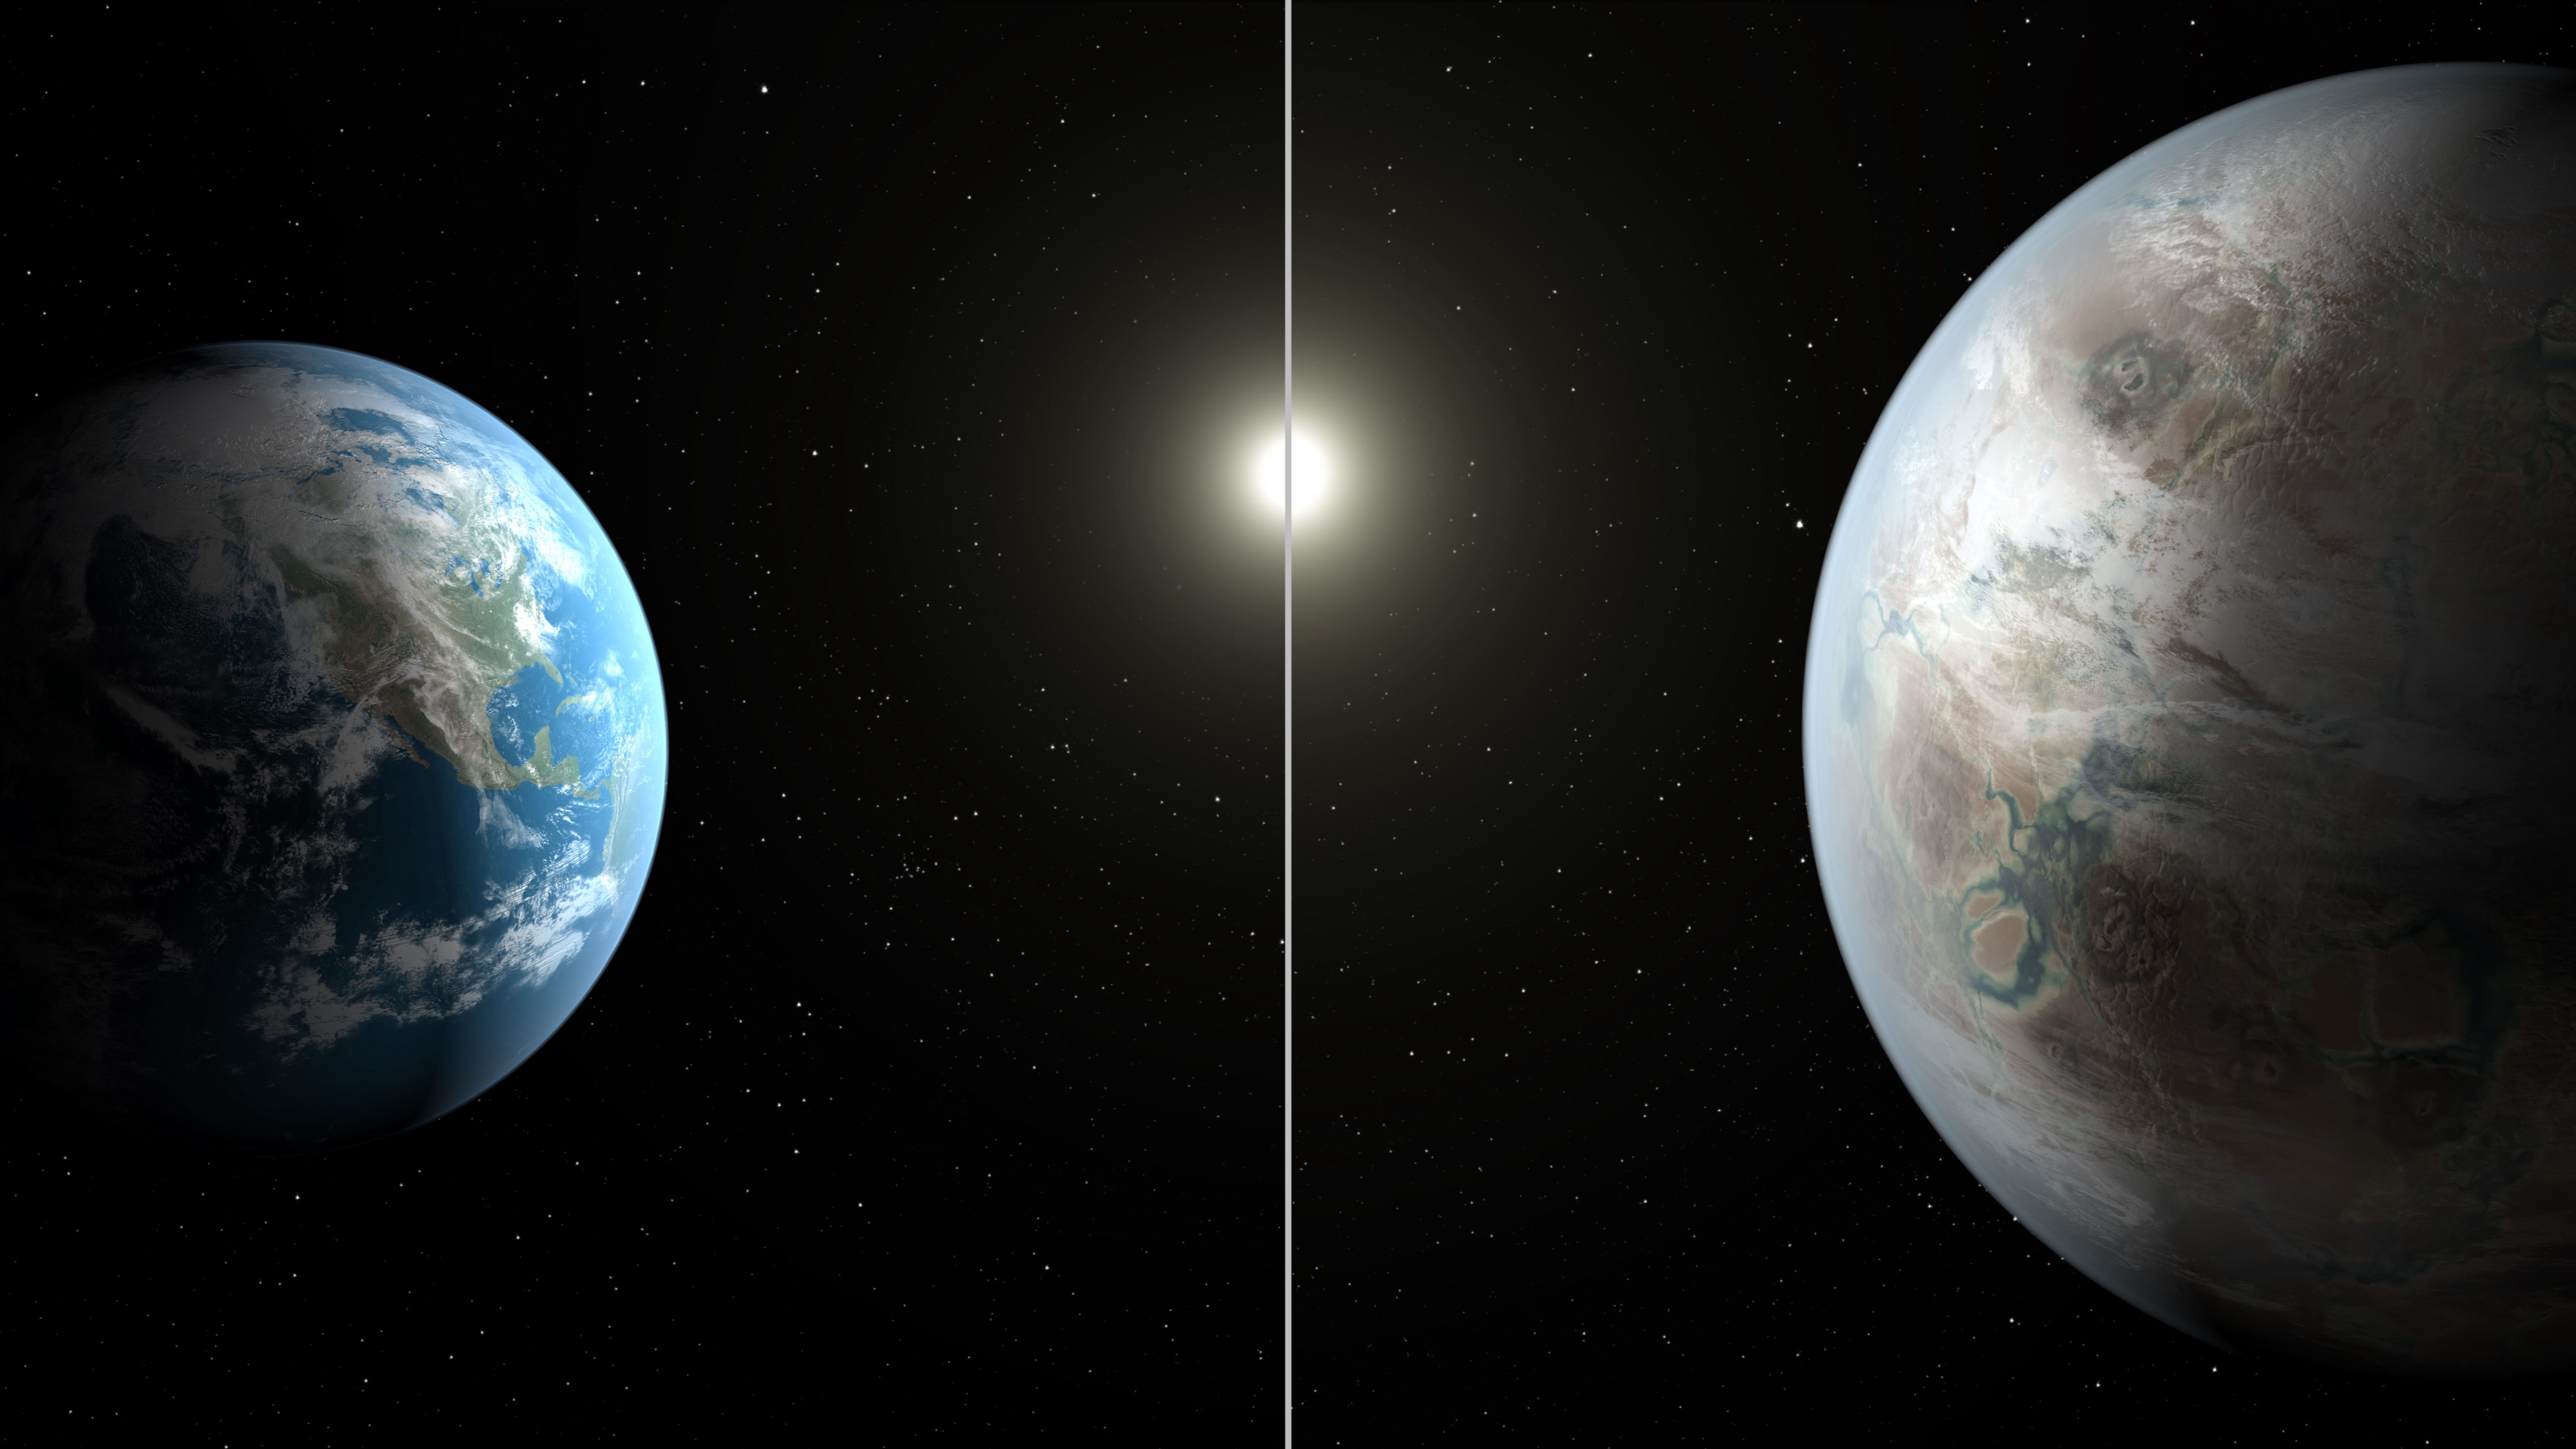 NASA's Kepler Mission Discovers Bigger, Older Cousin to Earth